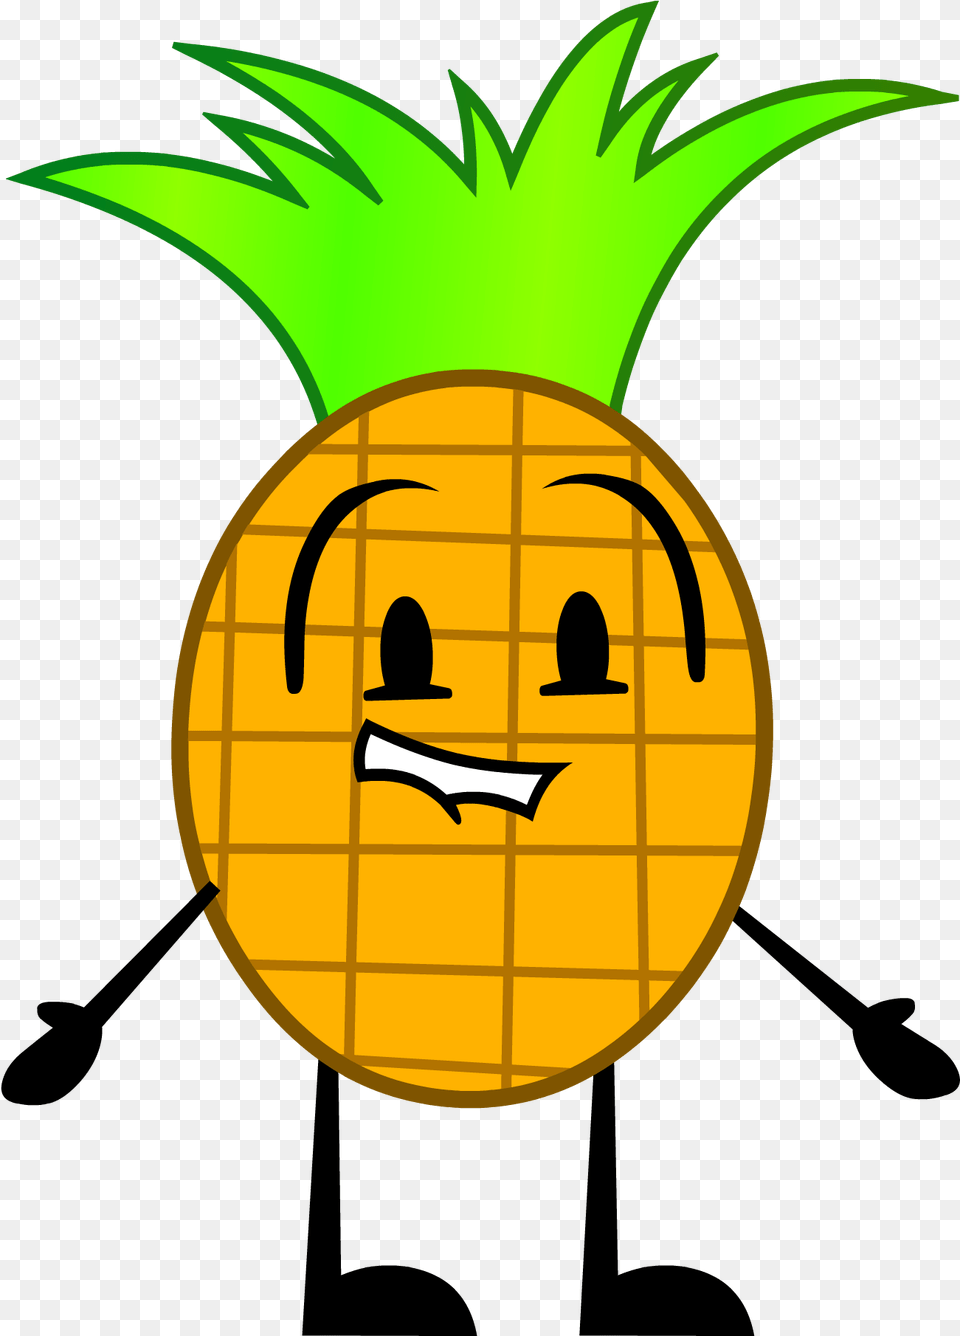 Transparent Cartoon Pineapple Cartoon Pineapple Head, Produce, Food, Fruit, Plant Png Image